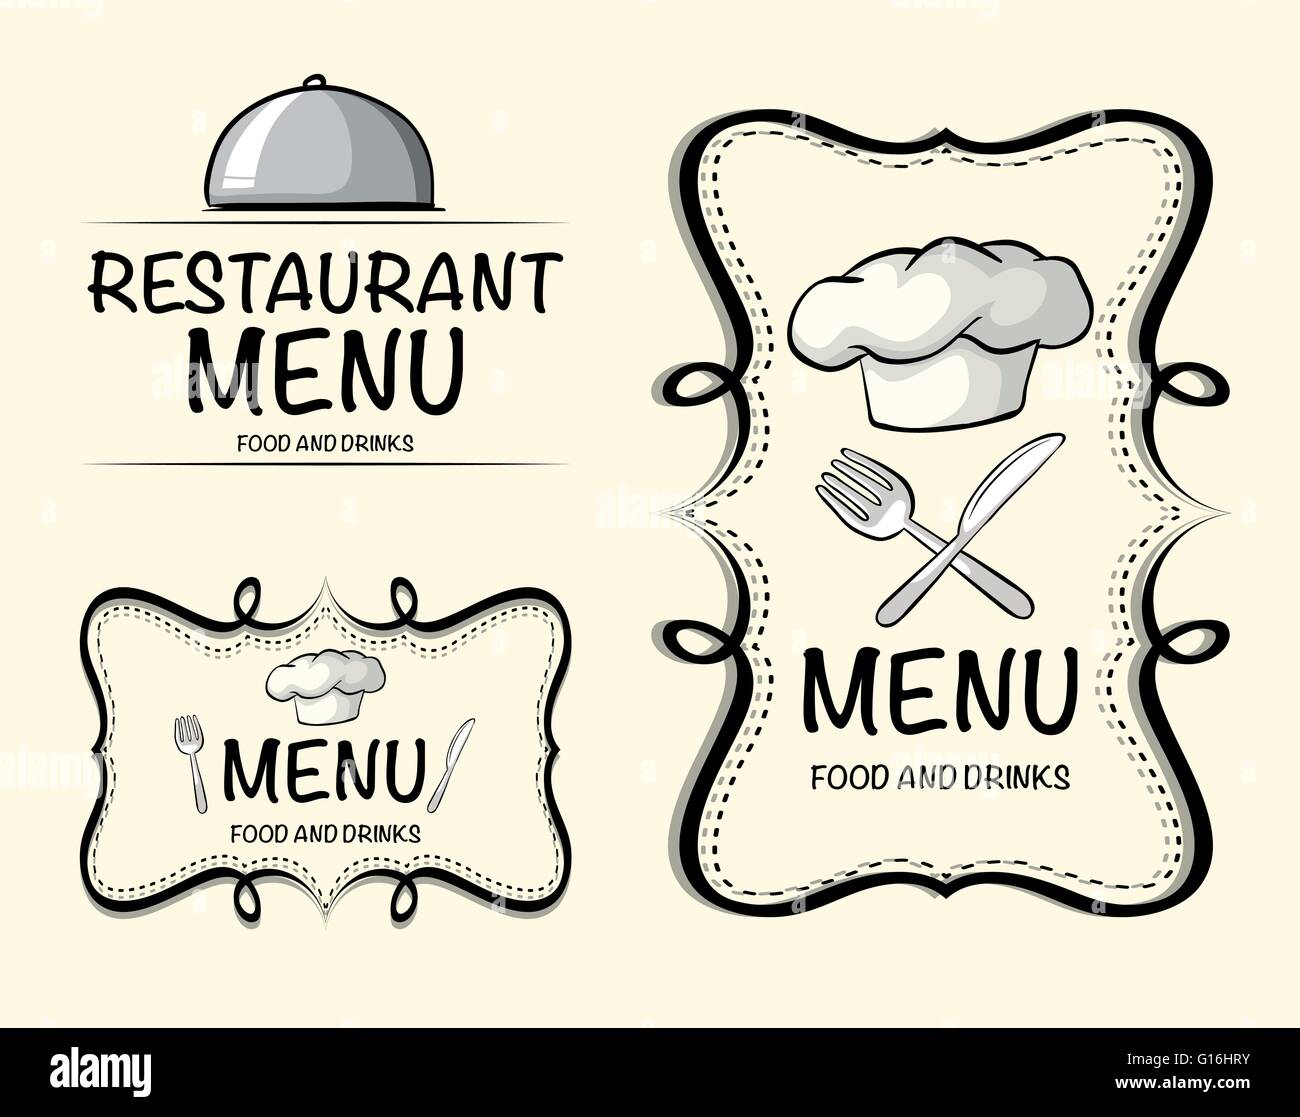 Different design of restaurant menu illustration Stock Vector Image ...